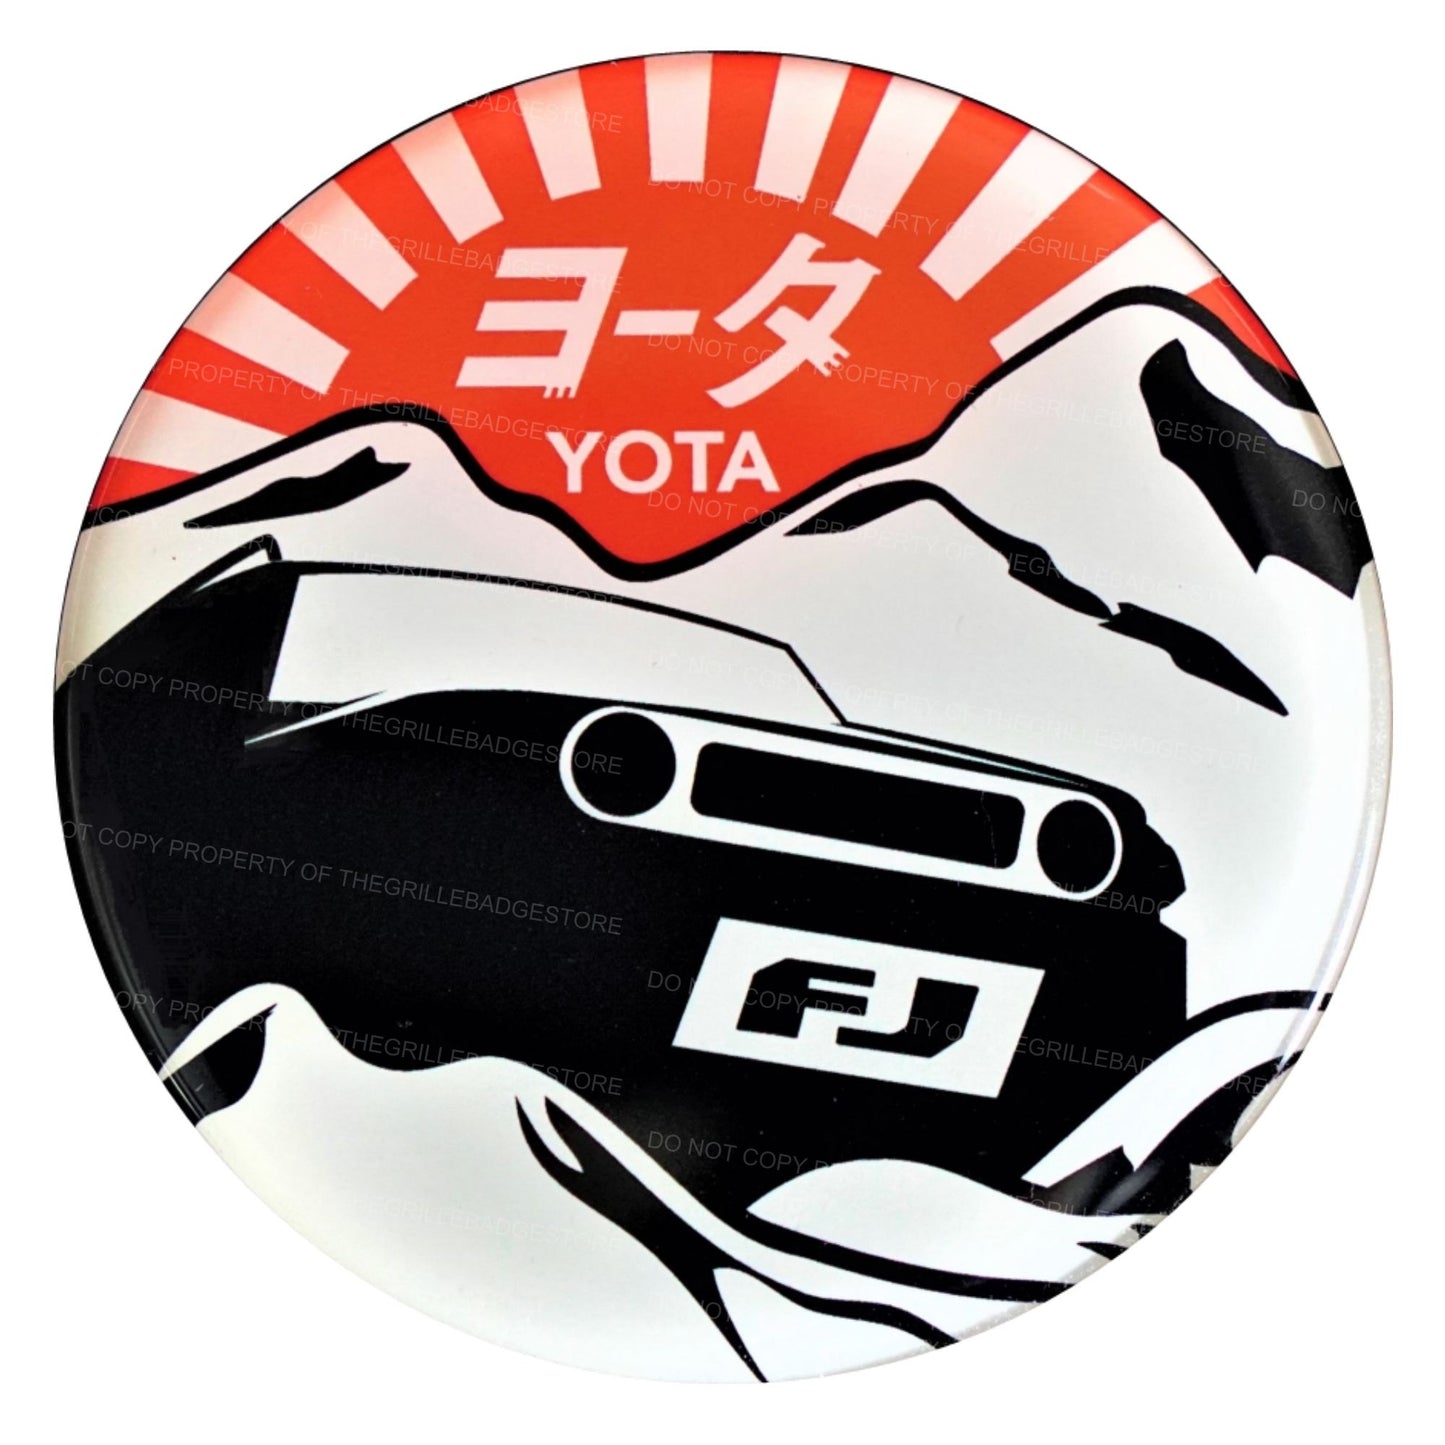 Aluminum Grille Badge Emblem For Toyota Cruiser TEQ 2.0